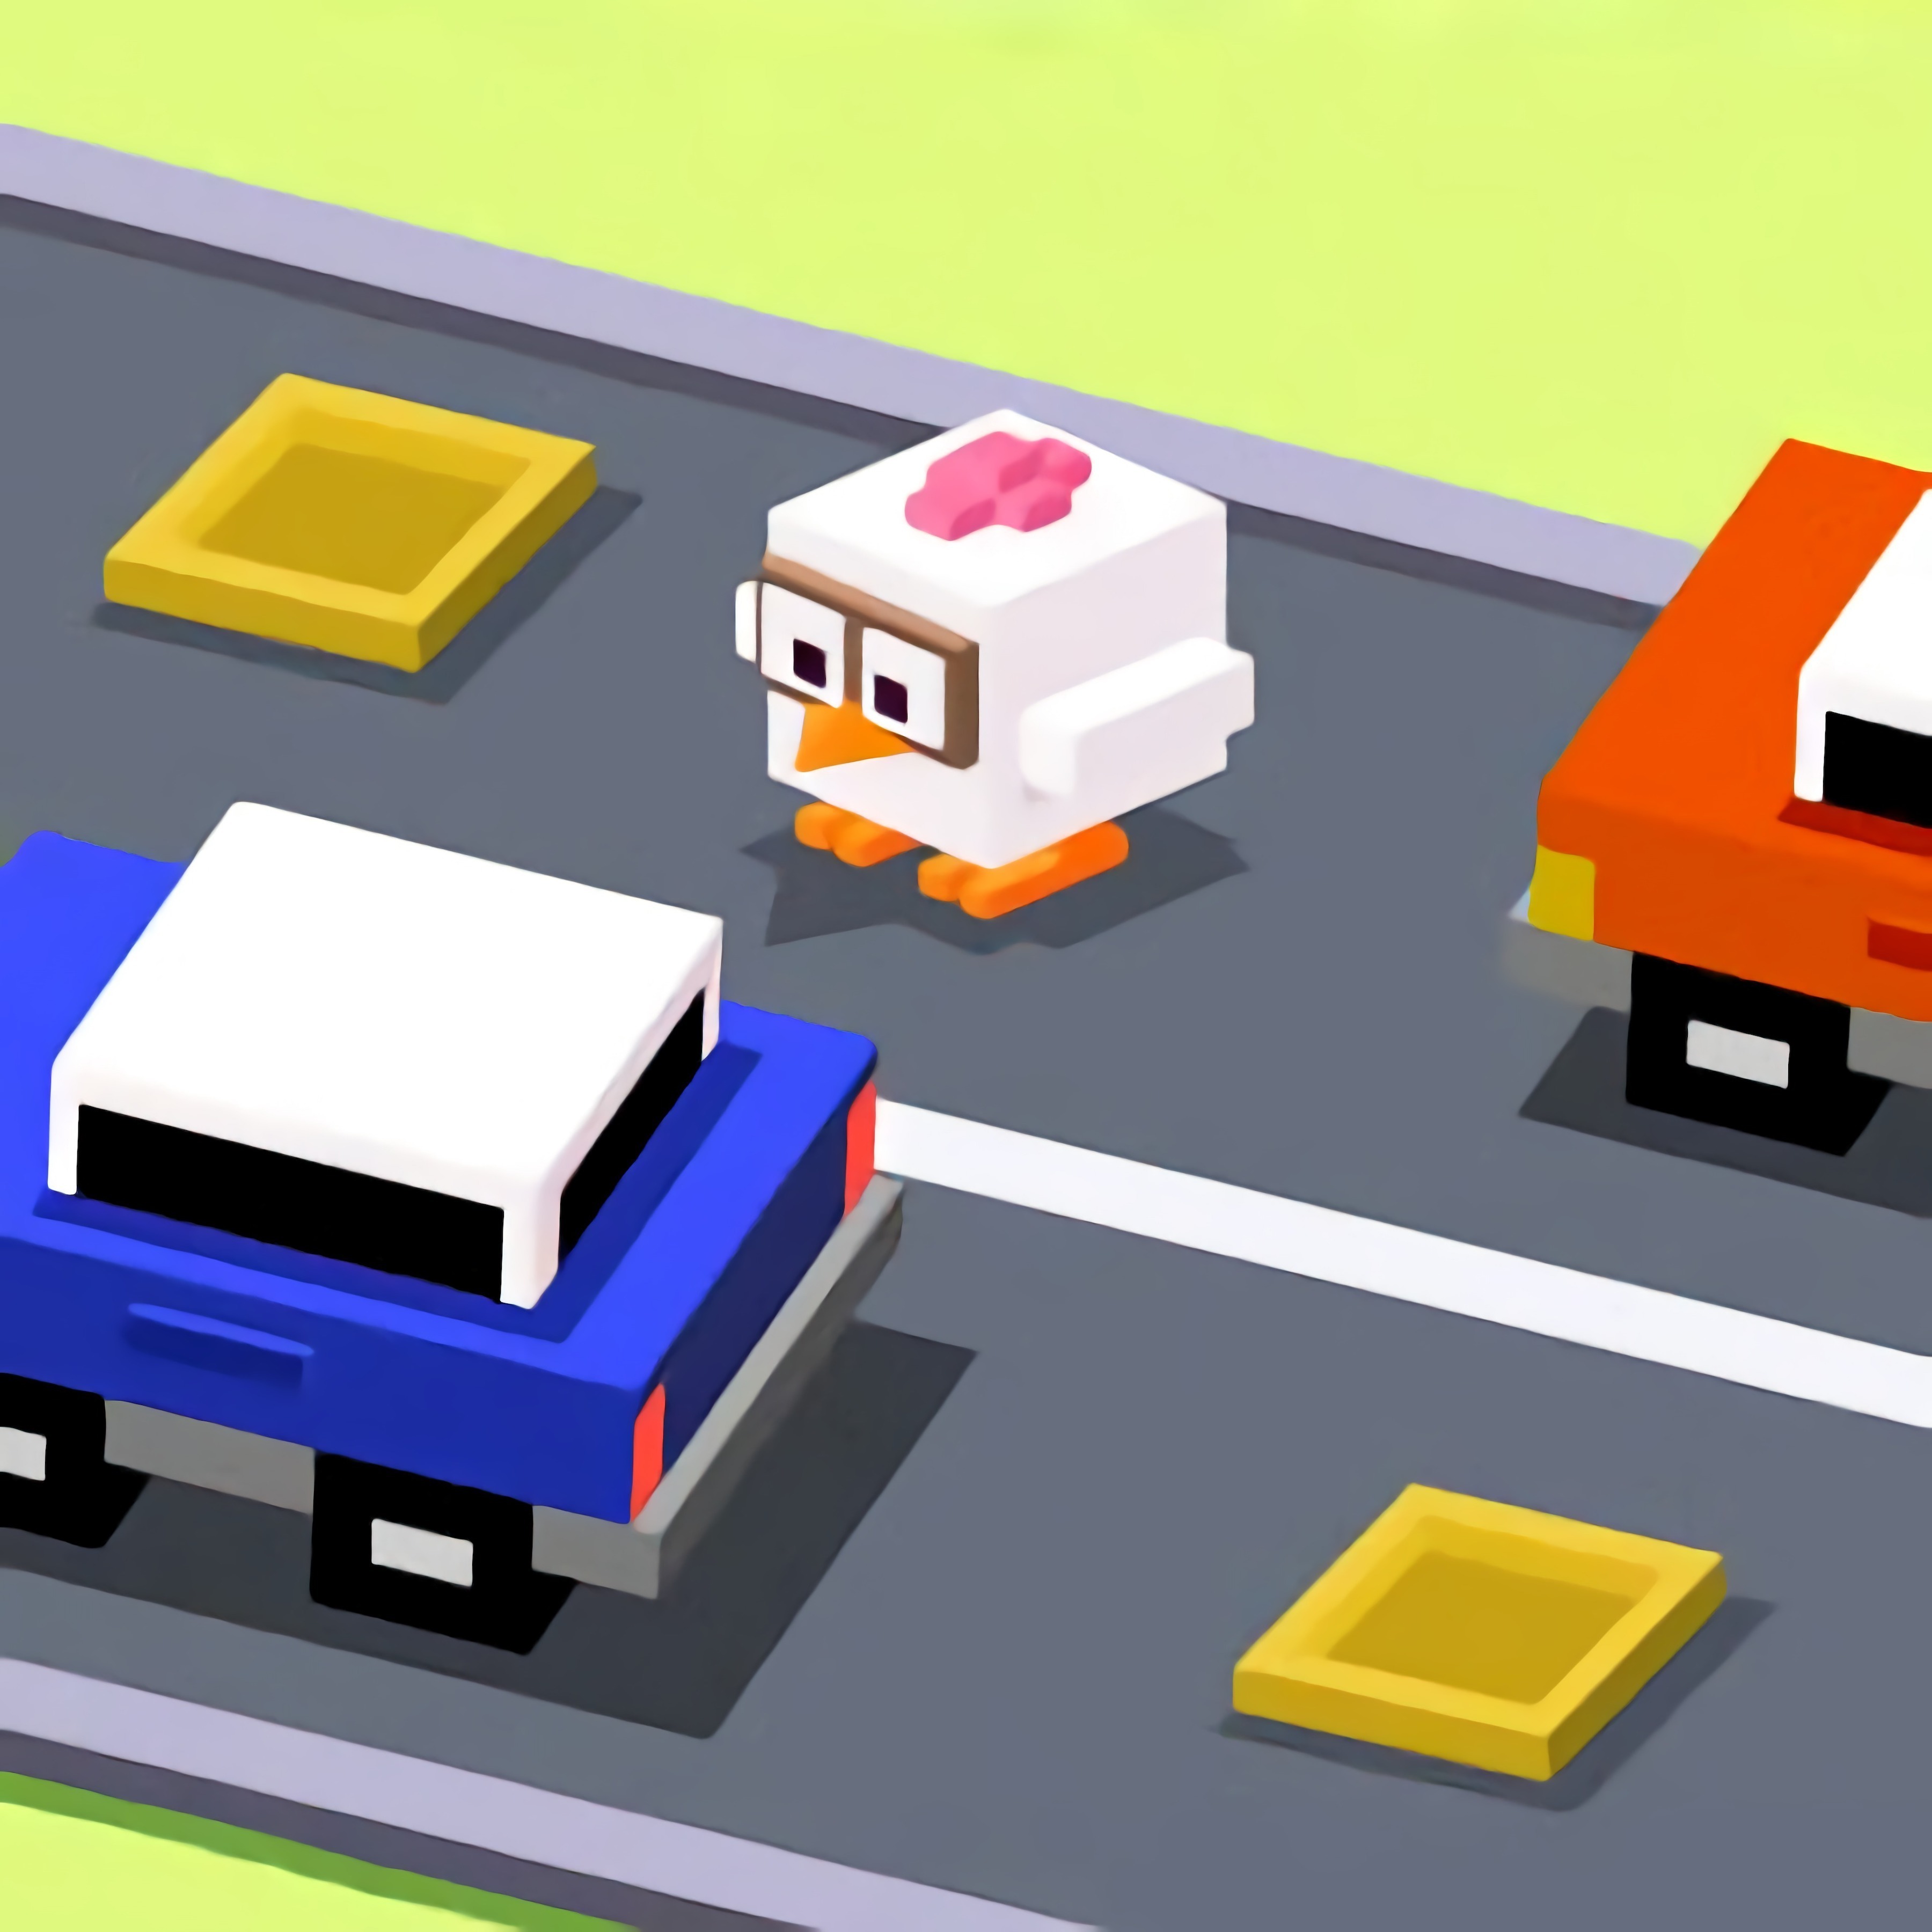 Road Crossing Games